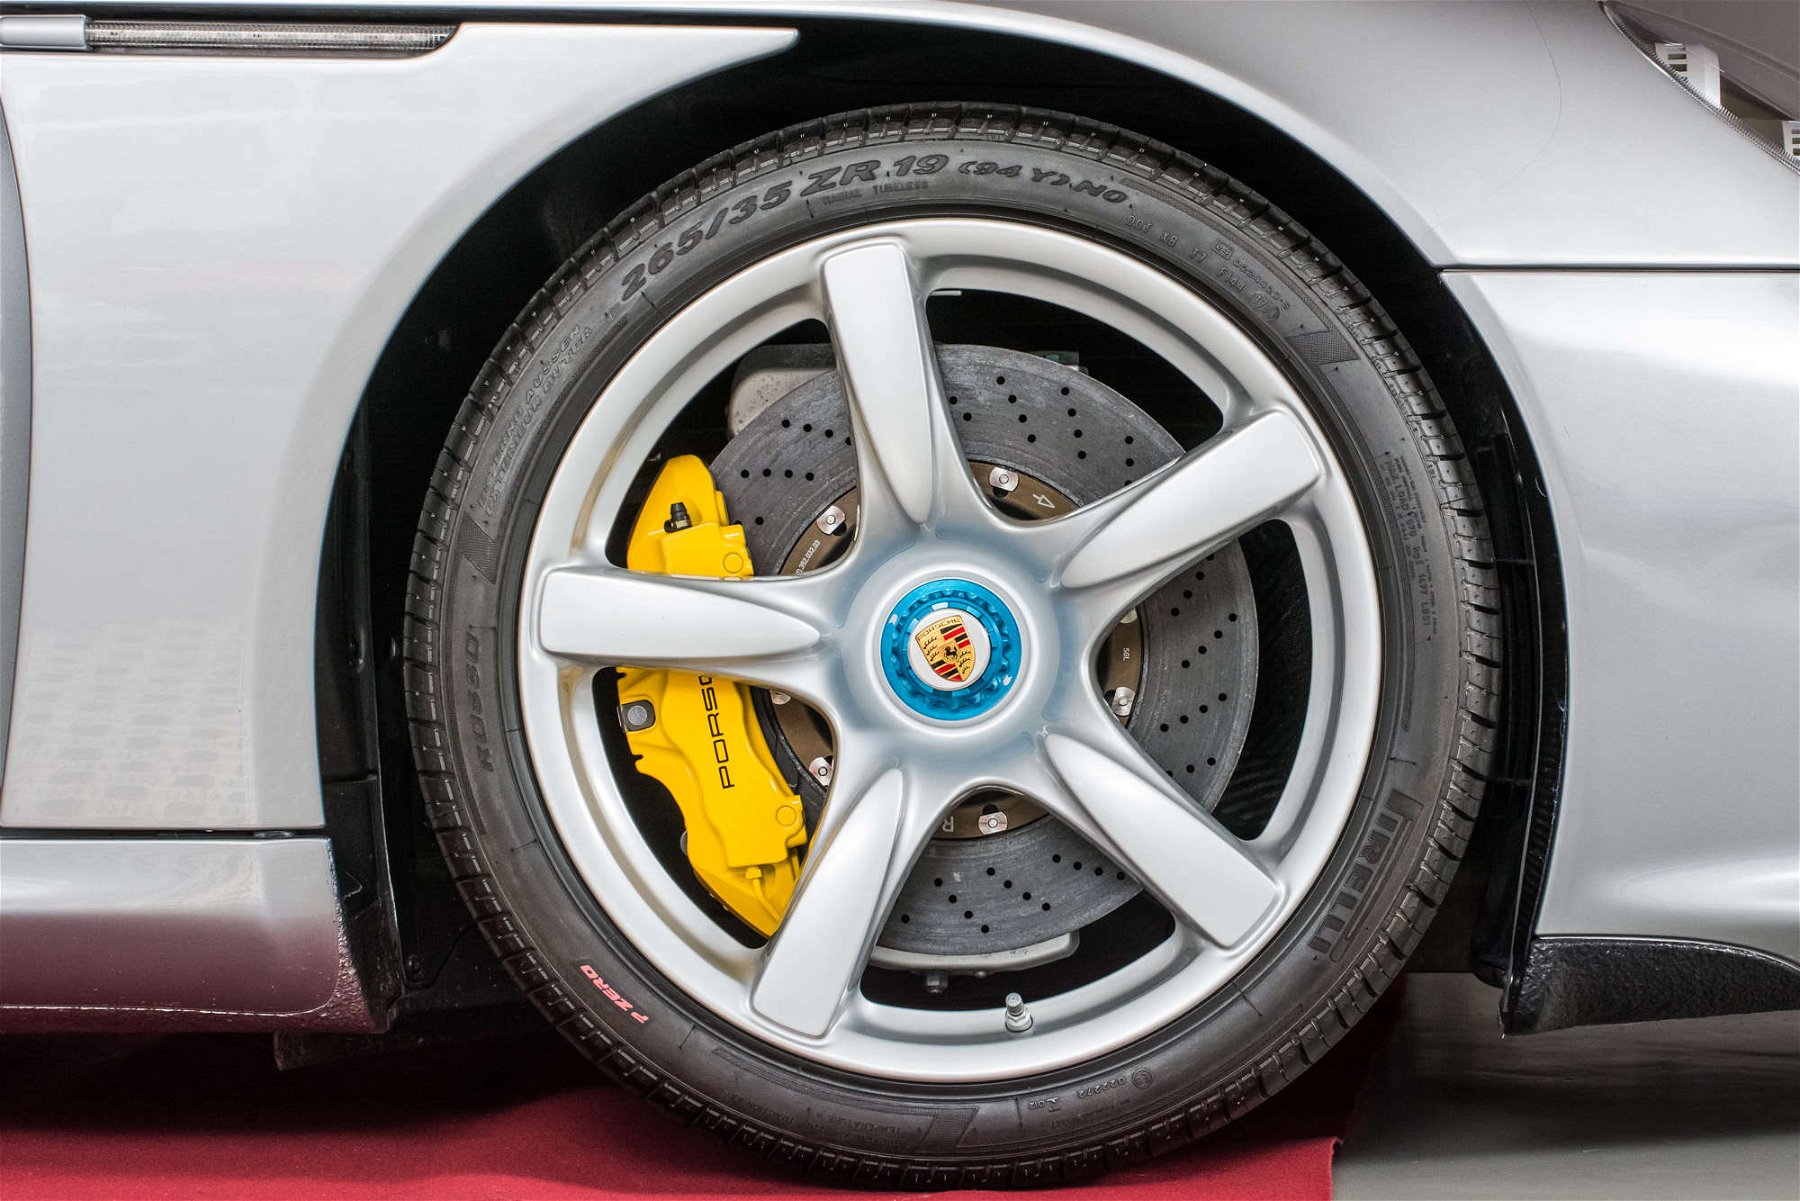 Porsche Ceramic Composite Brake (PCCB)